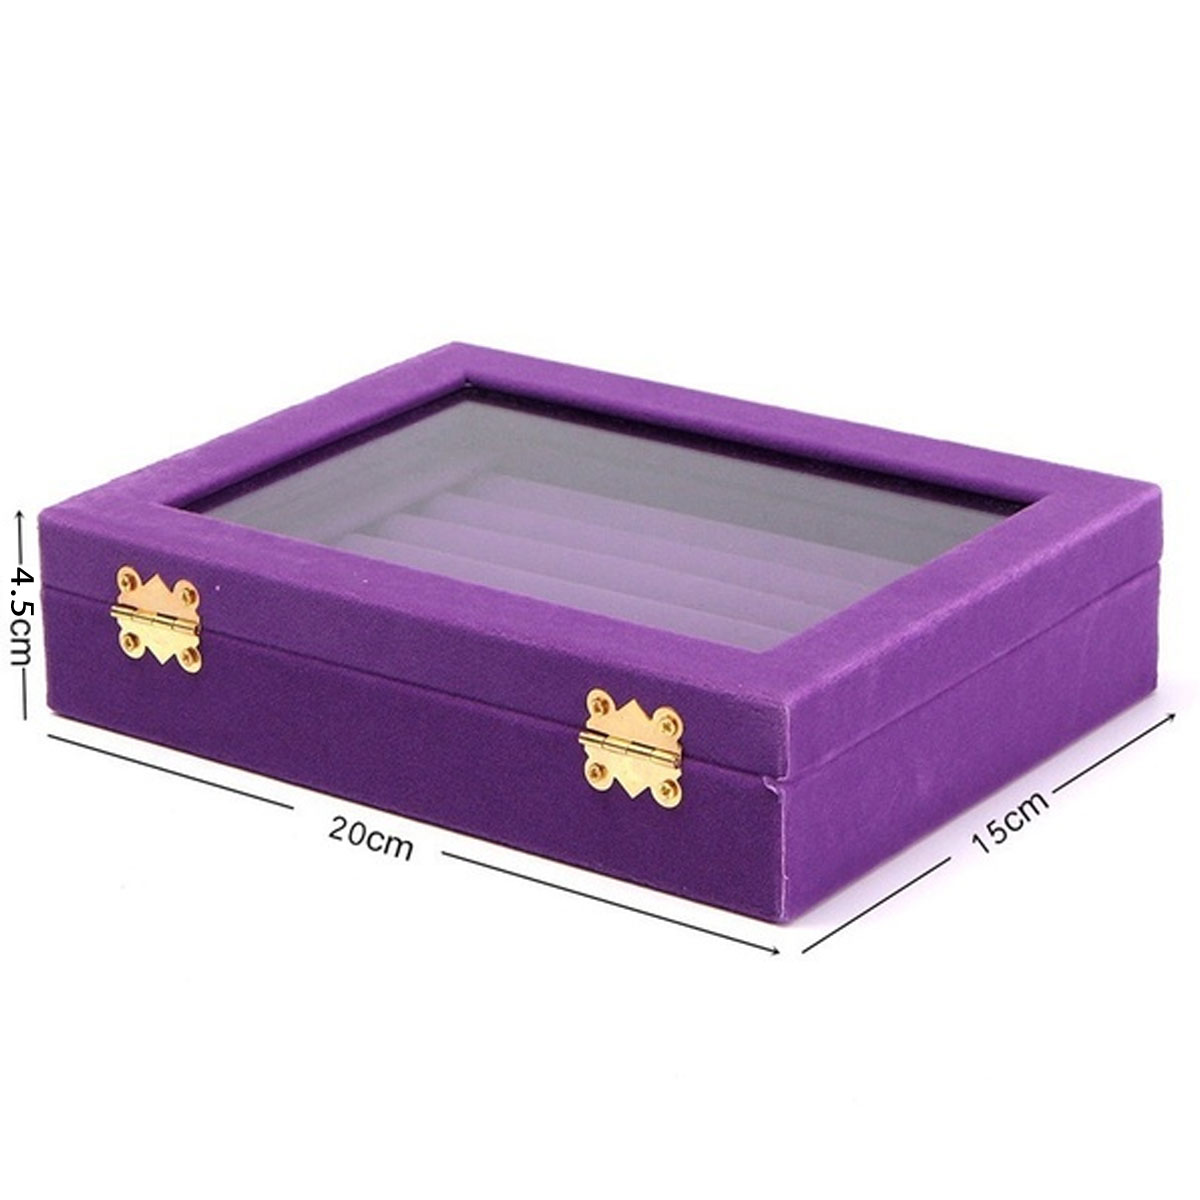 Jewelry-Velvet-Wood-Ring-Display-Organizer-Box-Tray-Holder-Earring-Storage-Case-1589869-8